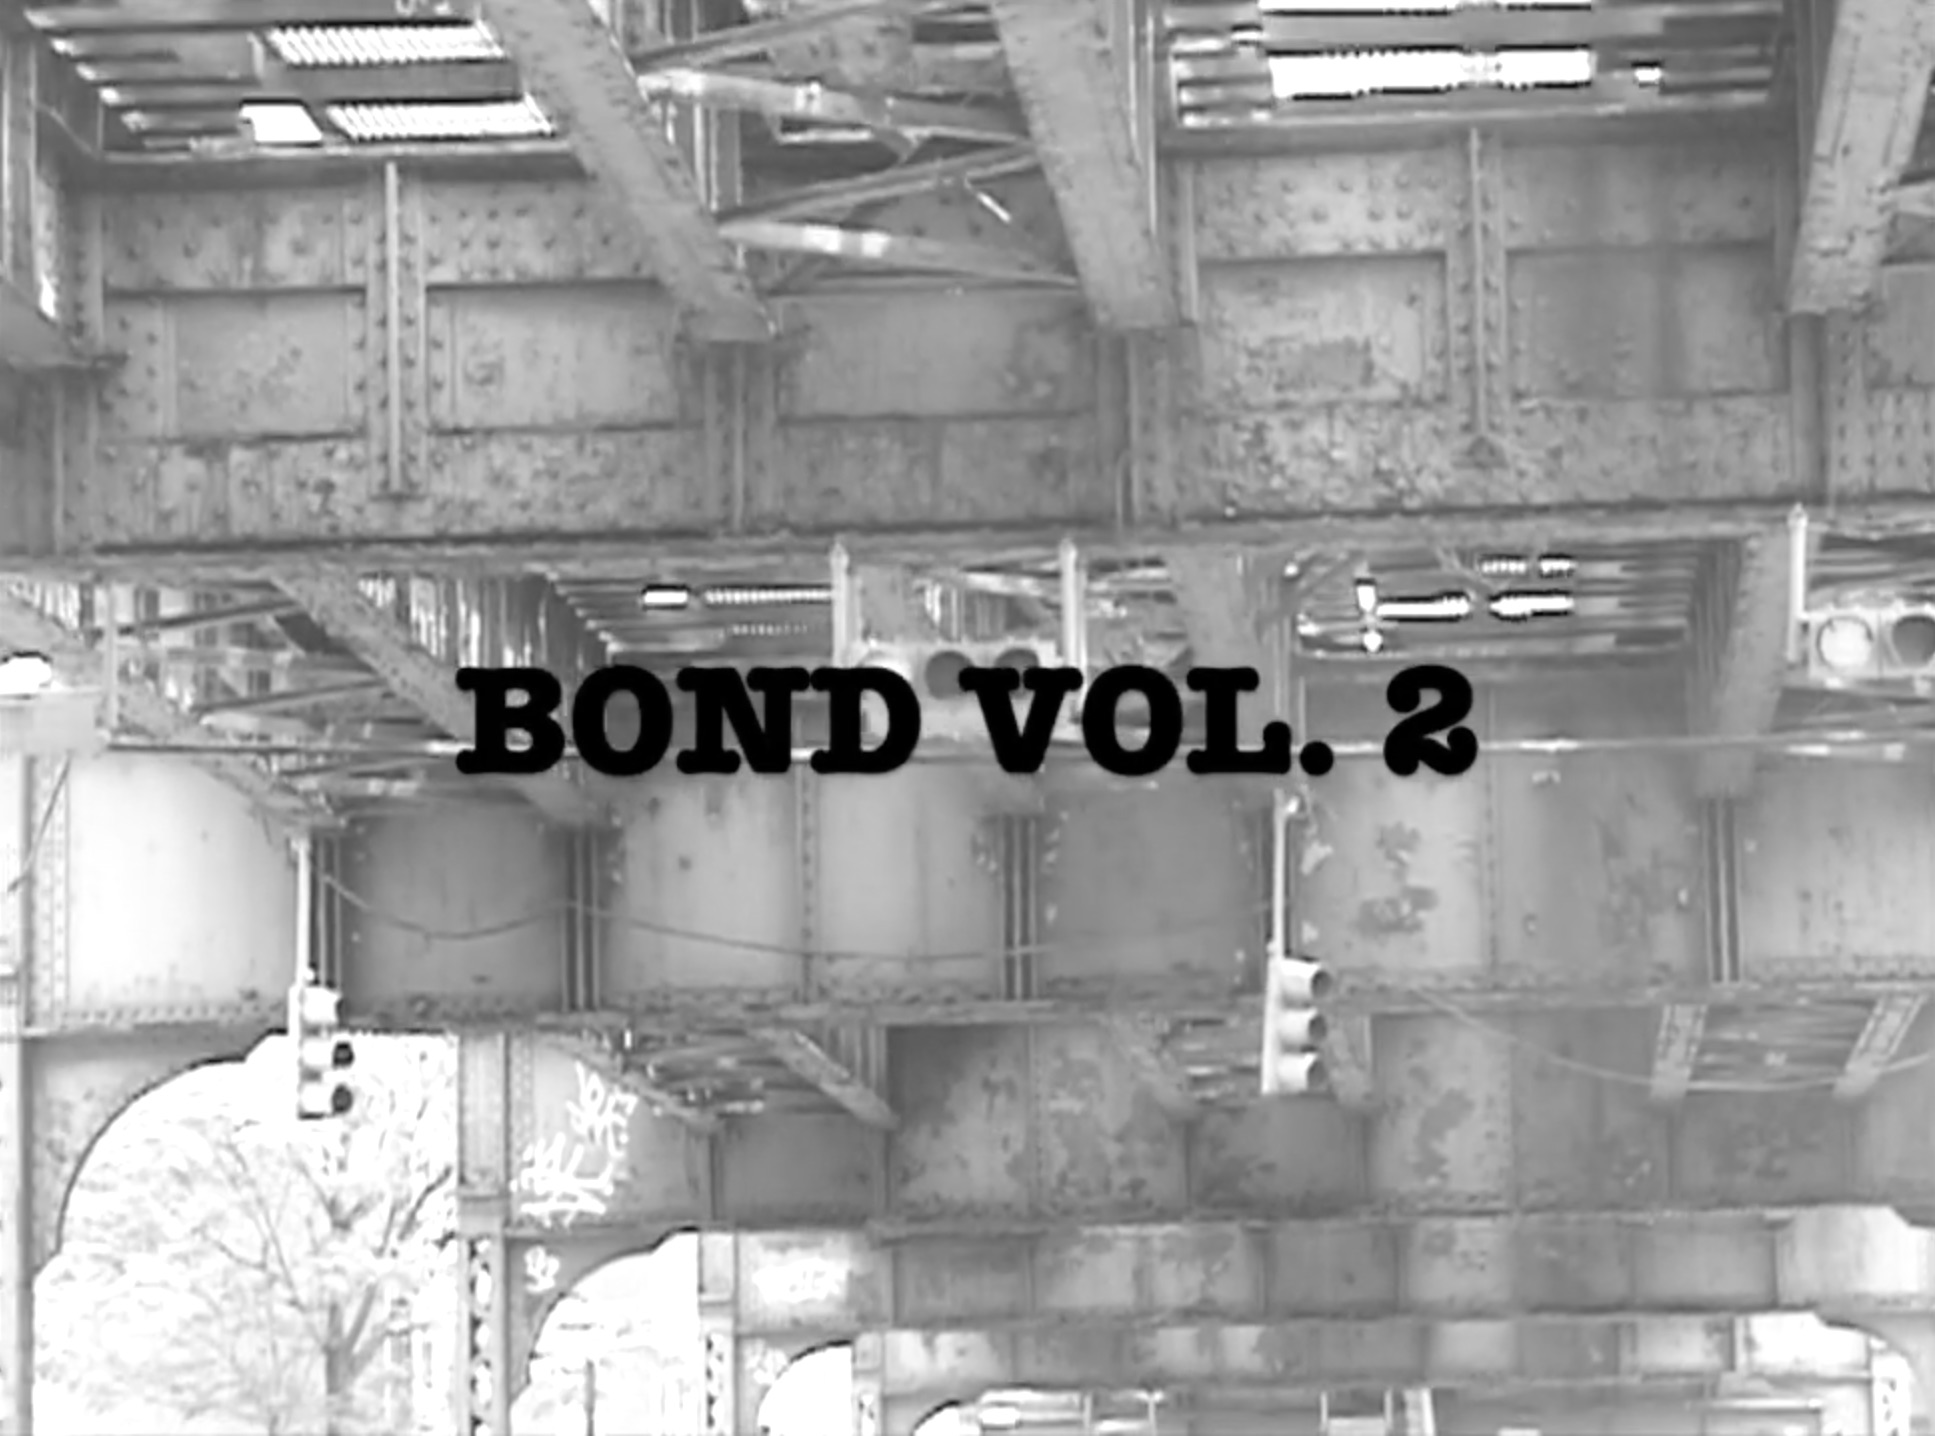 BOND VOL. 2 - "AMF" cover